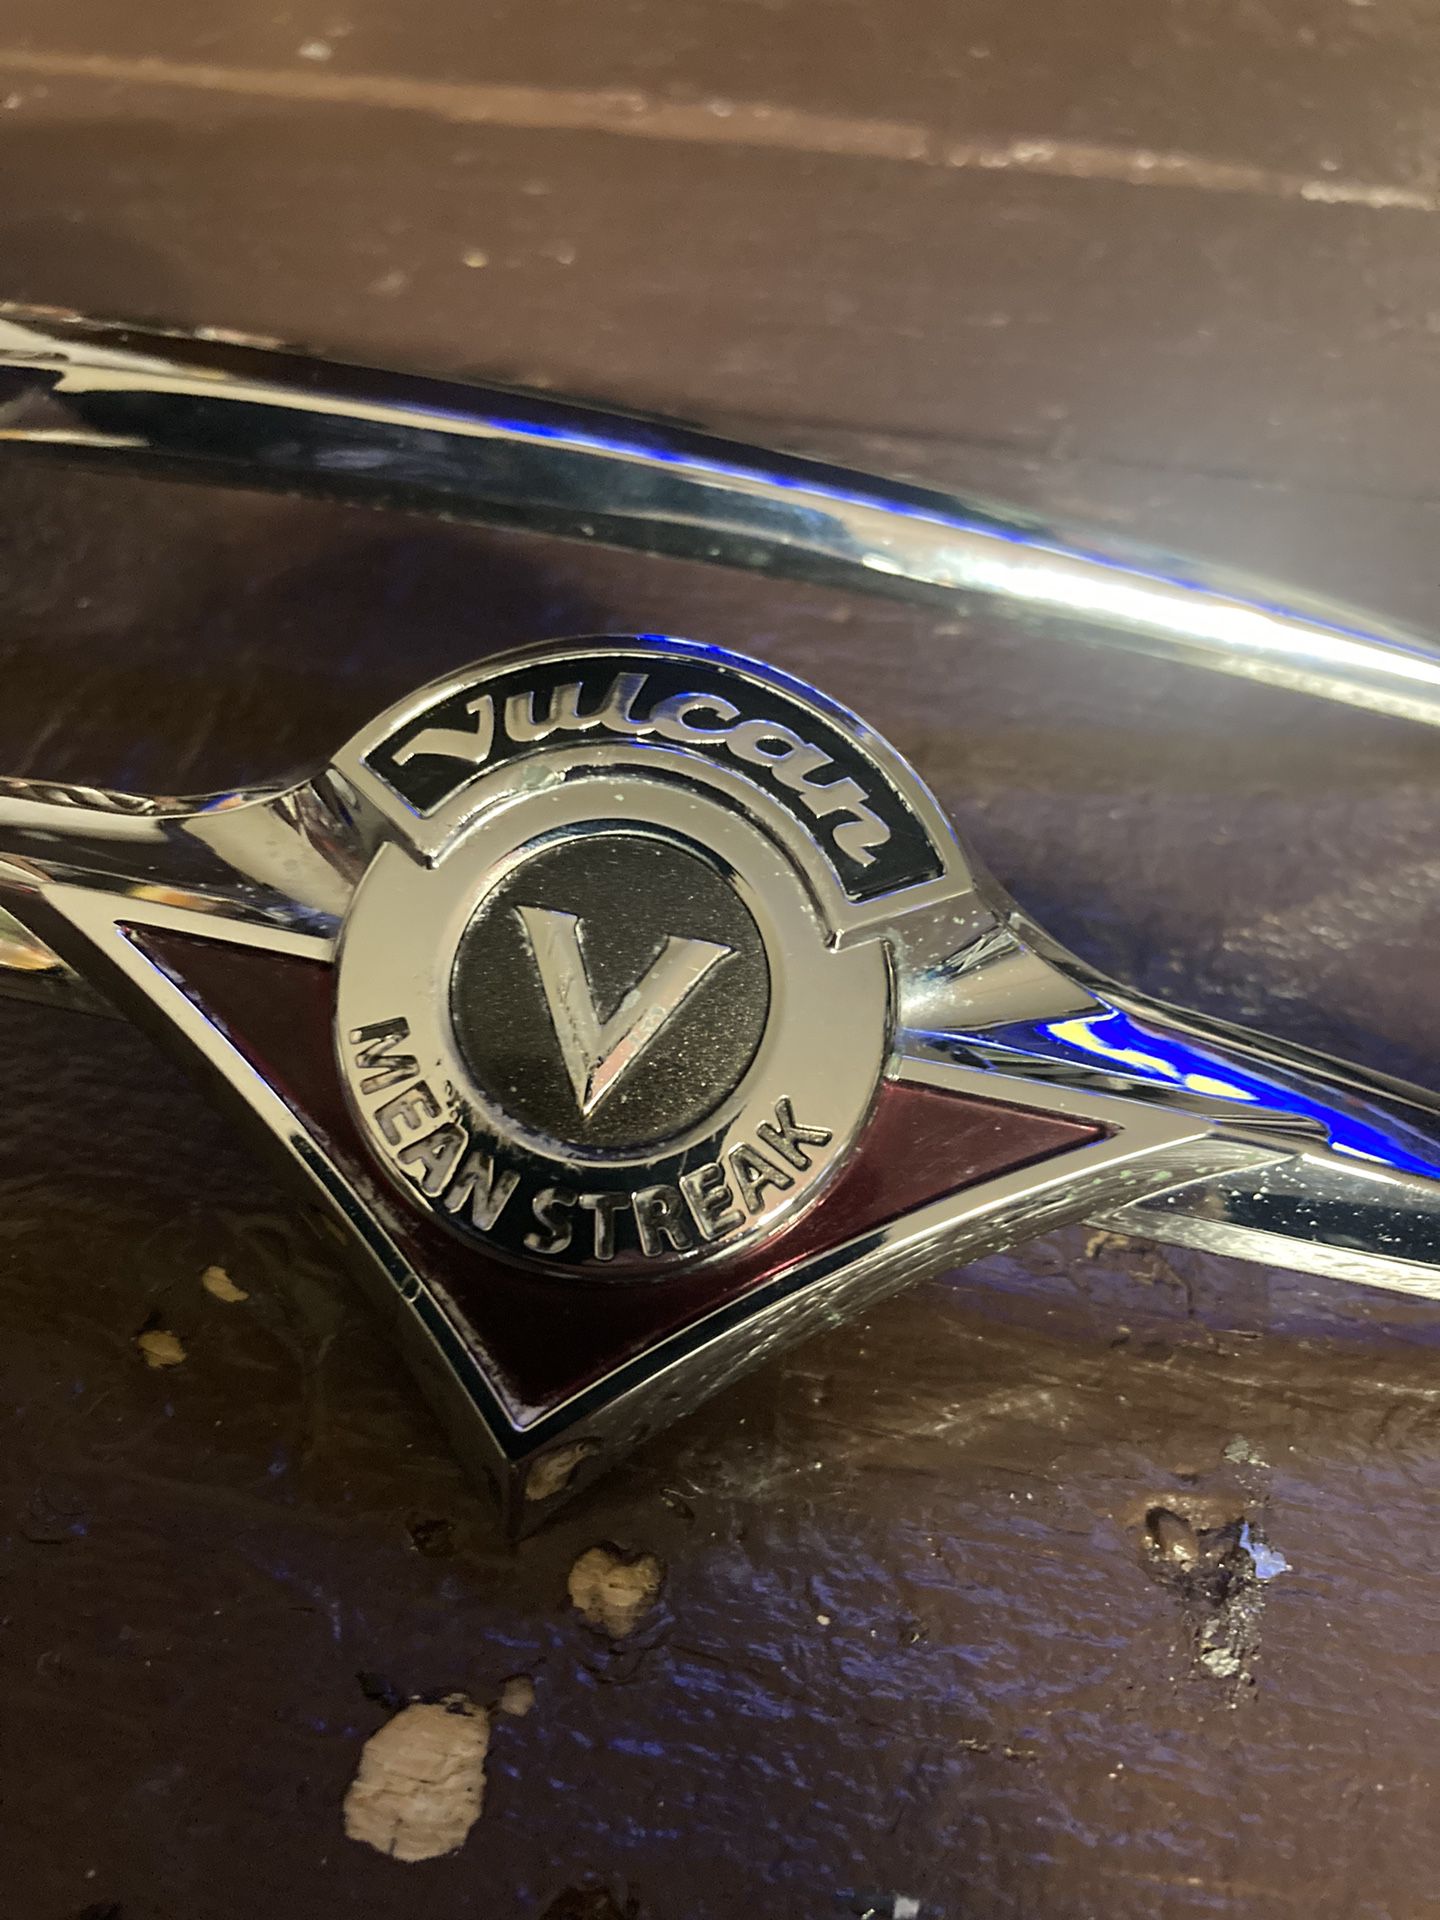 2008 Kawasaki Vulcan, gas tank badges